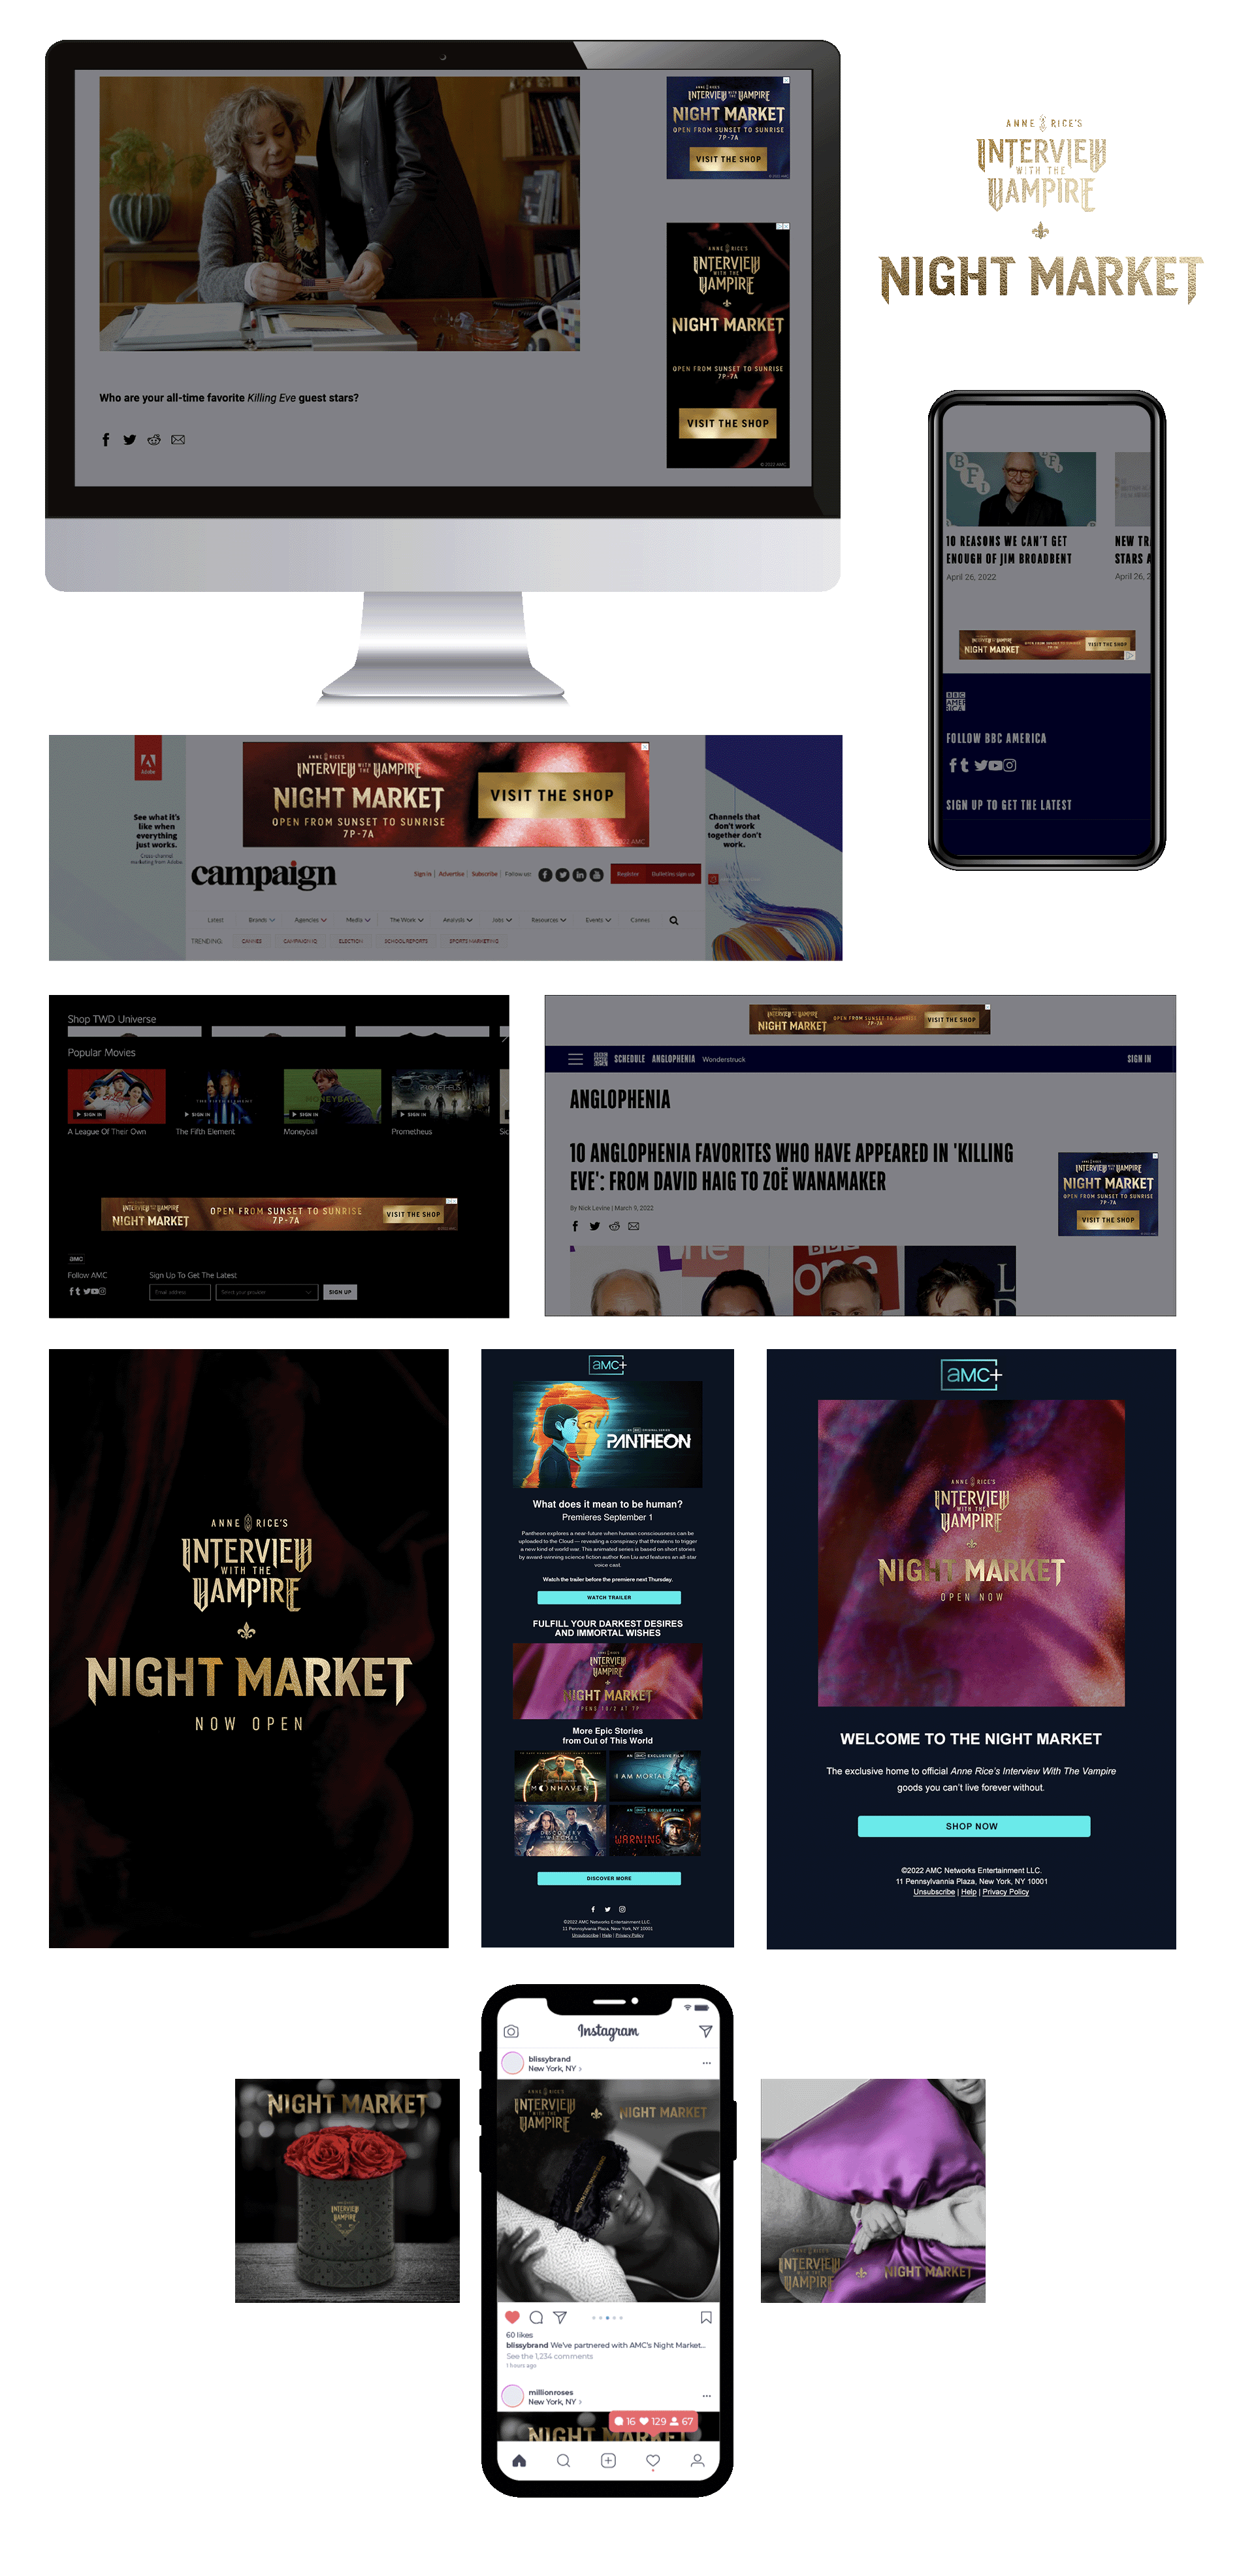 NightMarket_Banners